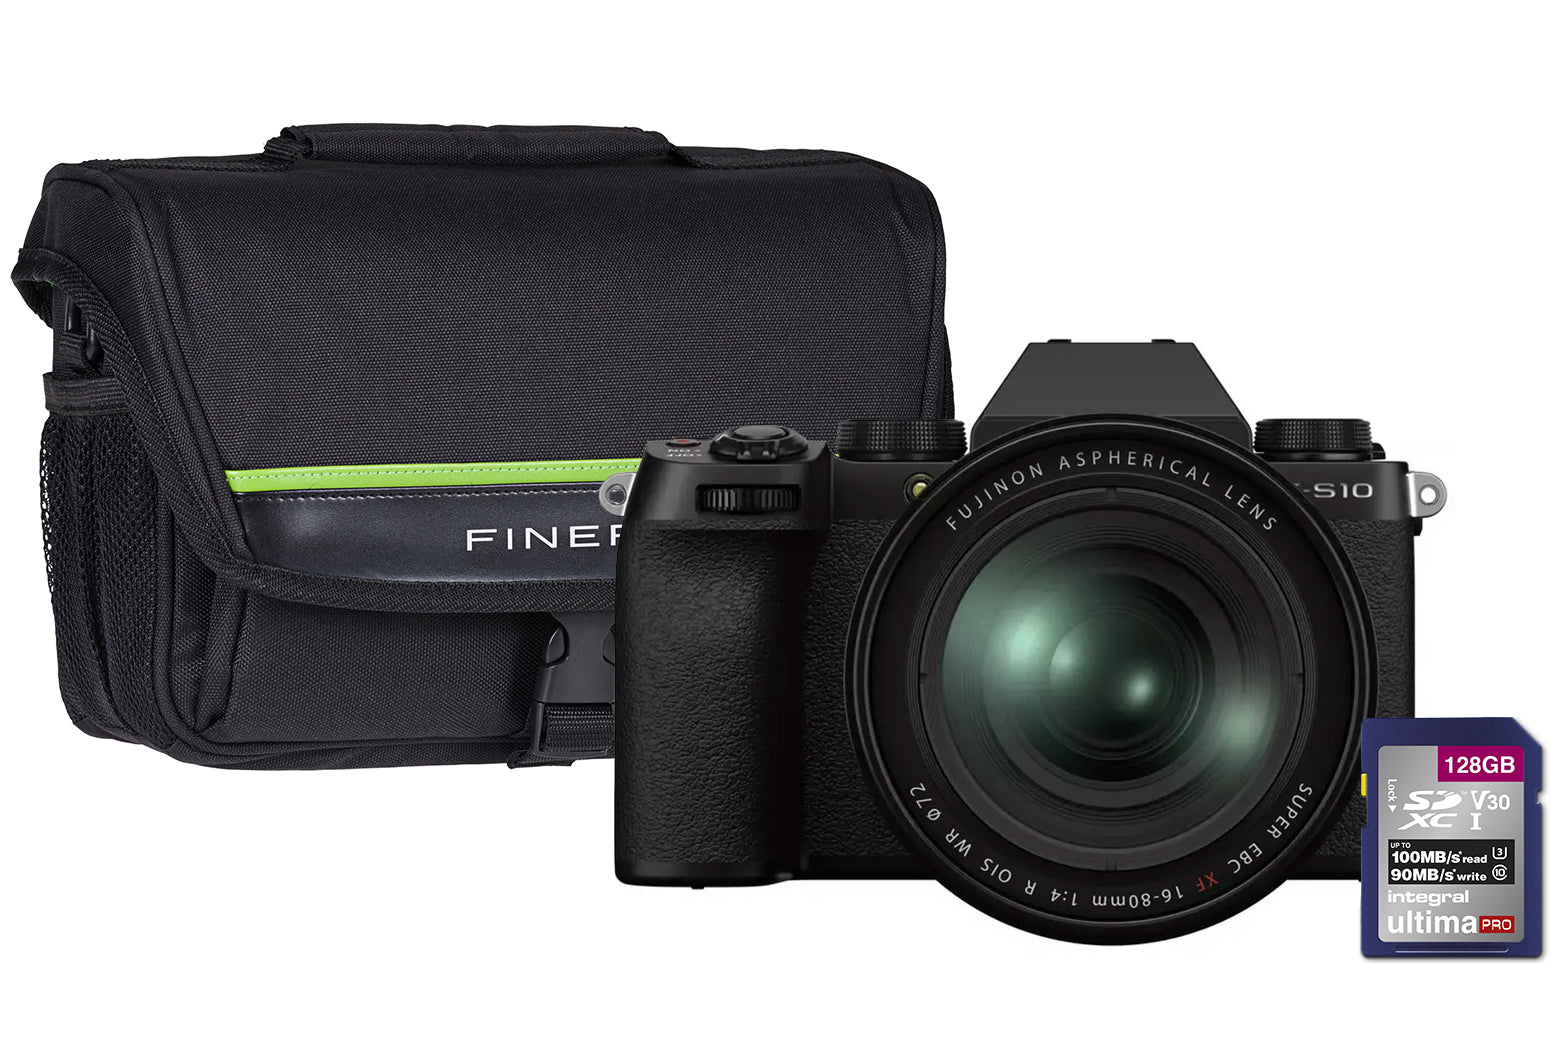 Fujifilm X-S10 Mirrorless Camera - Black (Camera + 16-80mm Lens + 128GB SD Card + Case)